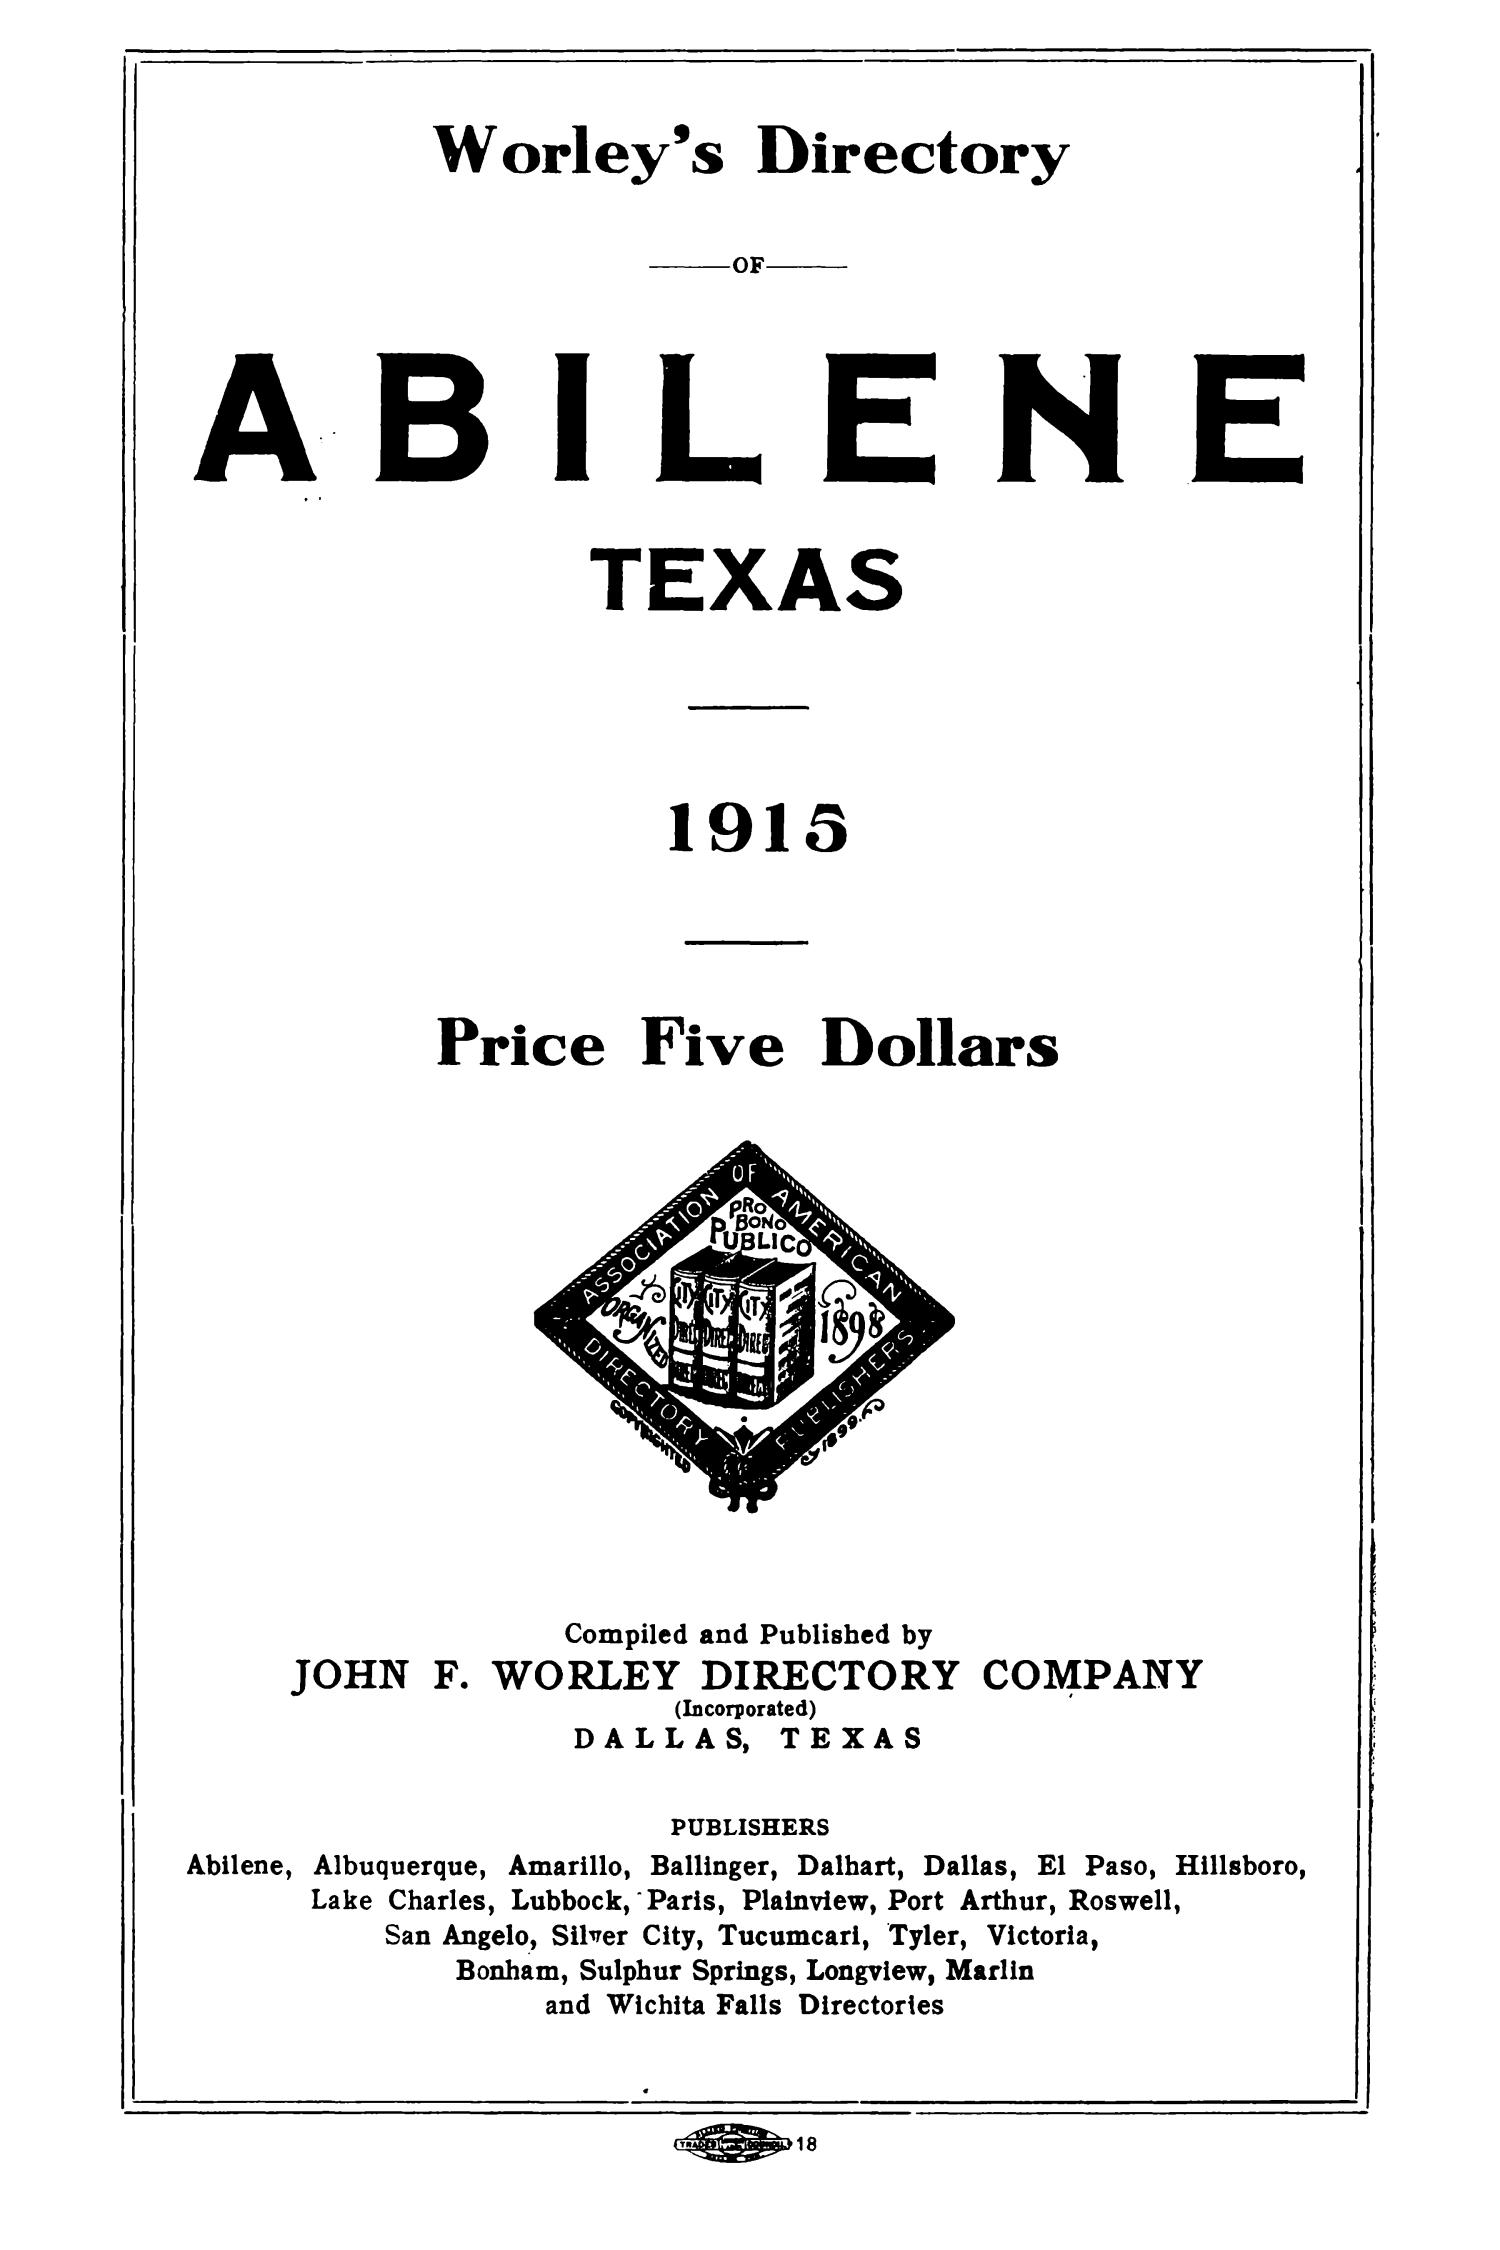 Worley's Directory of Abilene, Texas, 1915
                                                
                                                    3
                                                